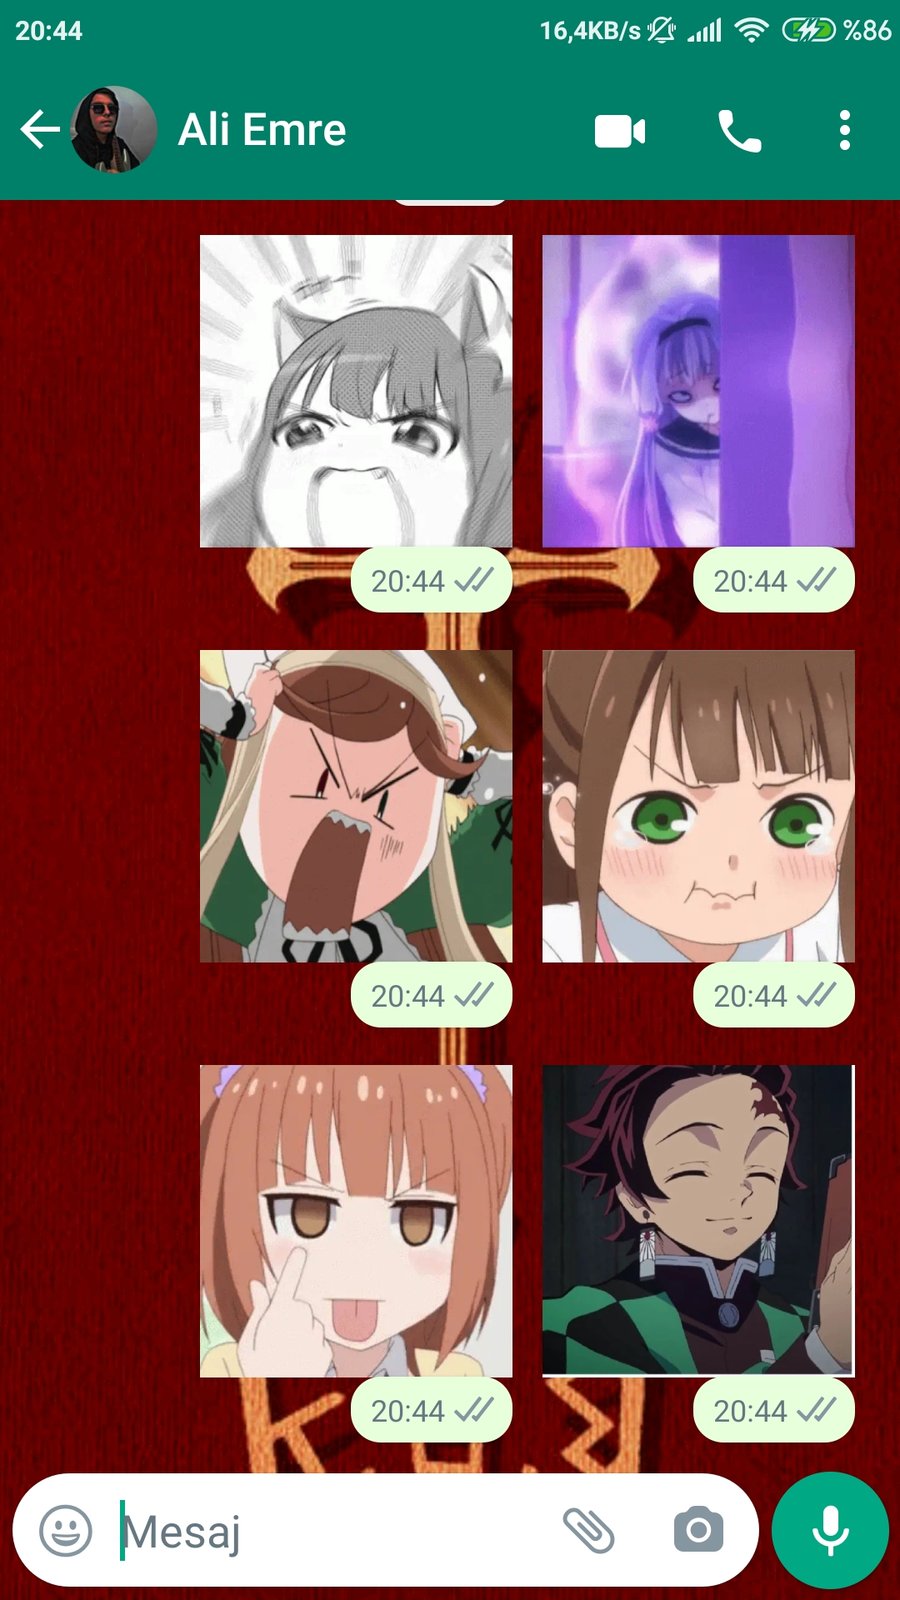 Anime Memes Stickers For WhatsApp 2021 v2.1 [Premium] APK